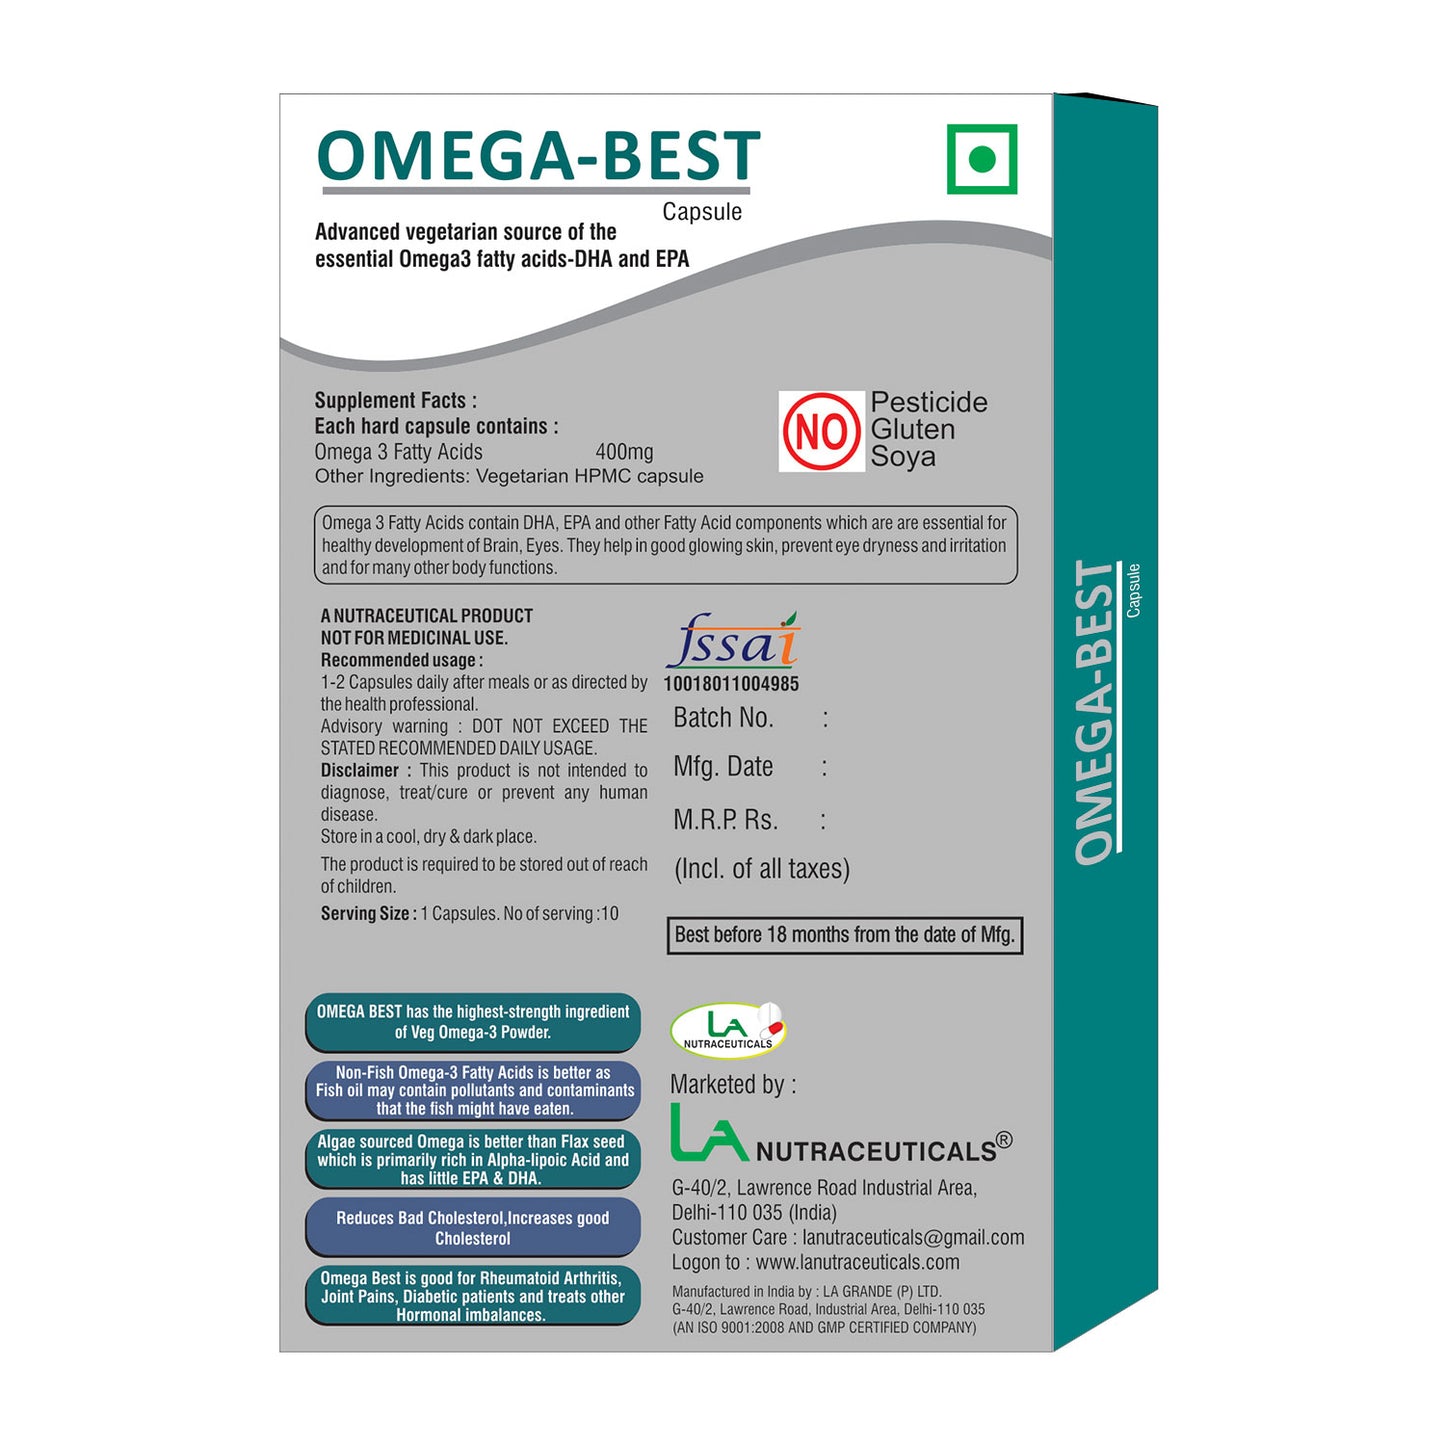 Omega Best Capsules - Advanced Source of Veg Omega 3 fatty acids DHA & EPA